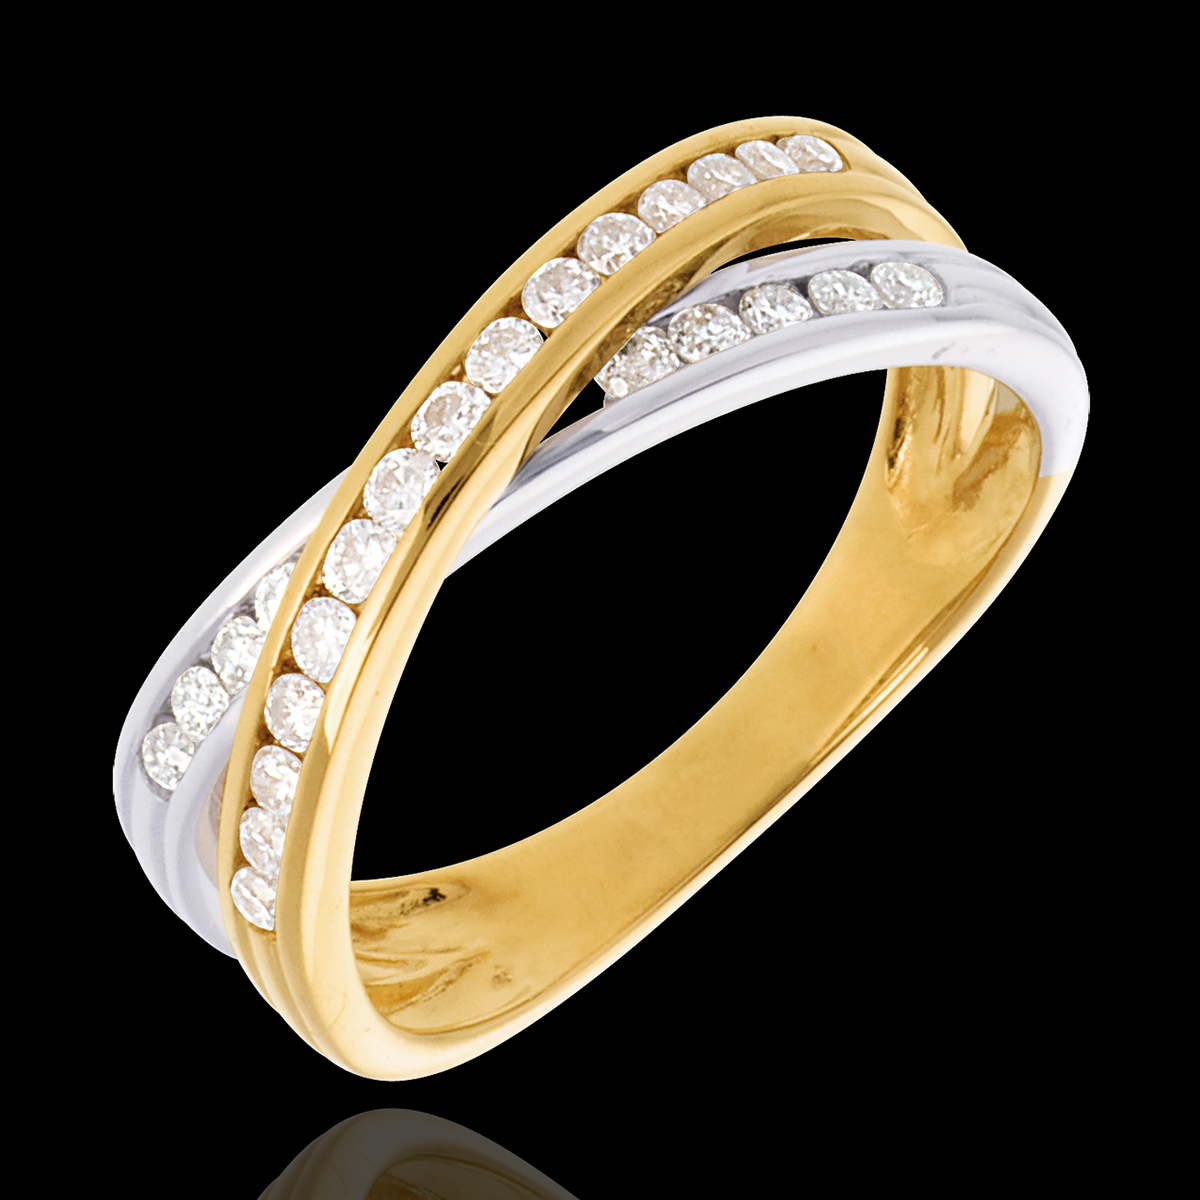 Tandem ring paved - 0.38 carat - 25diamonds : Edenly jewellery